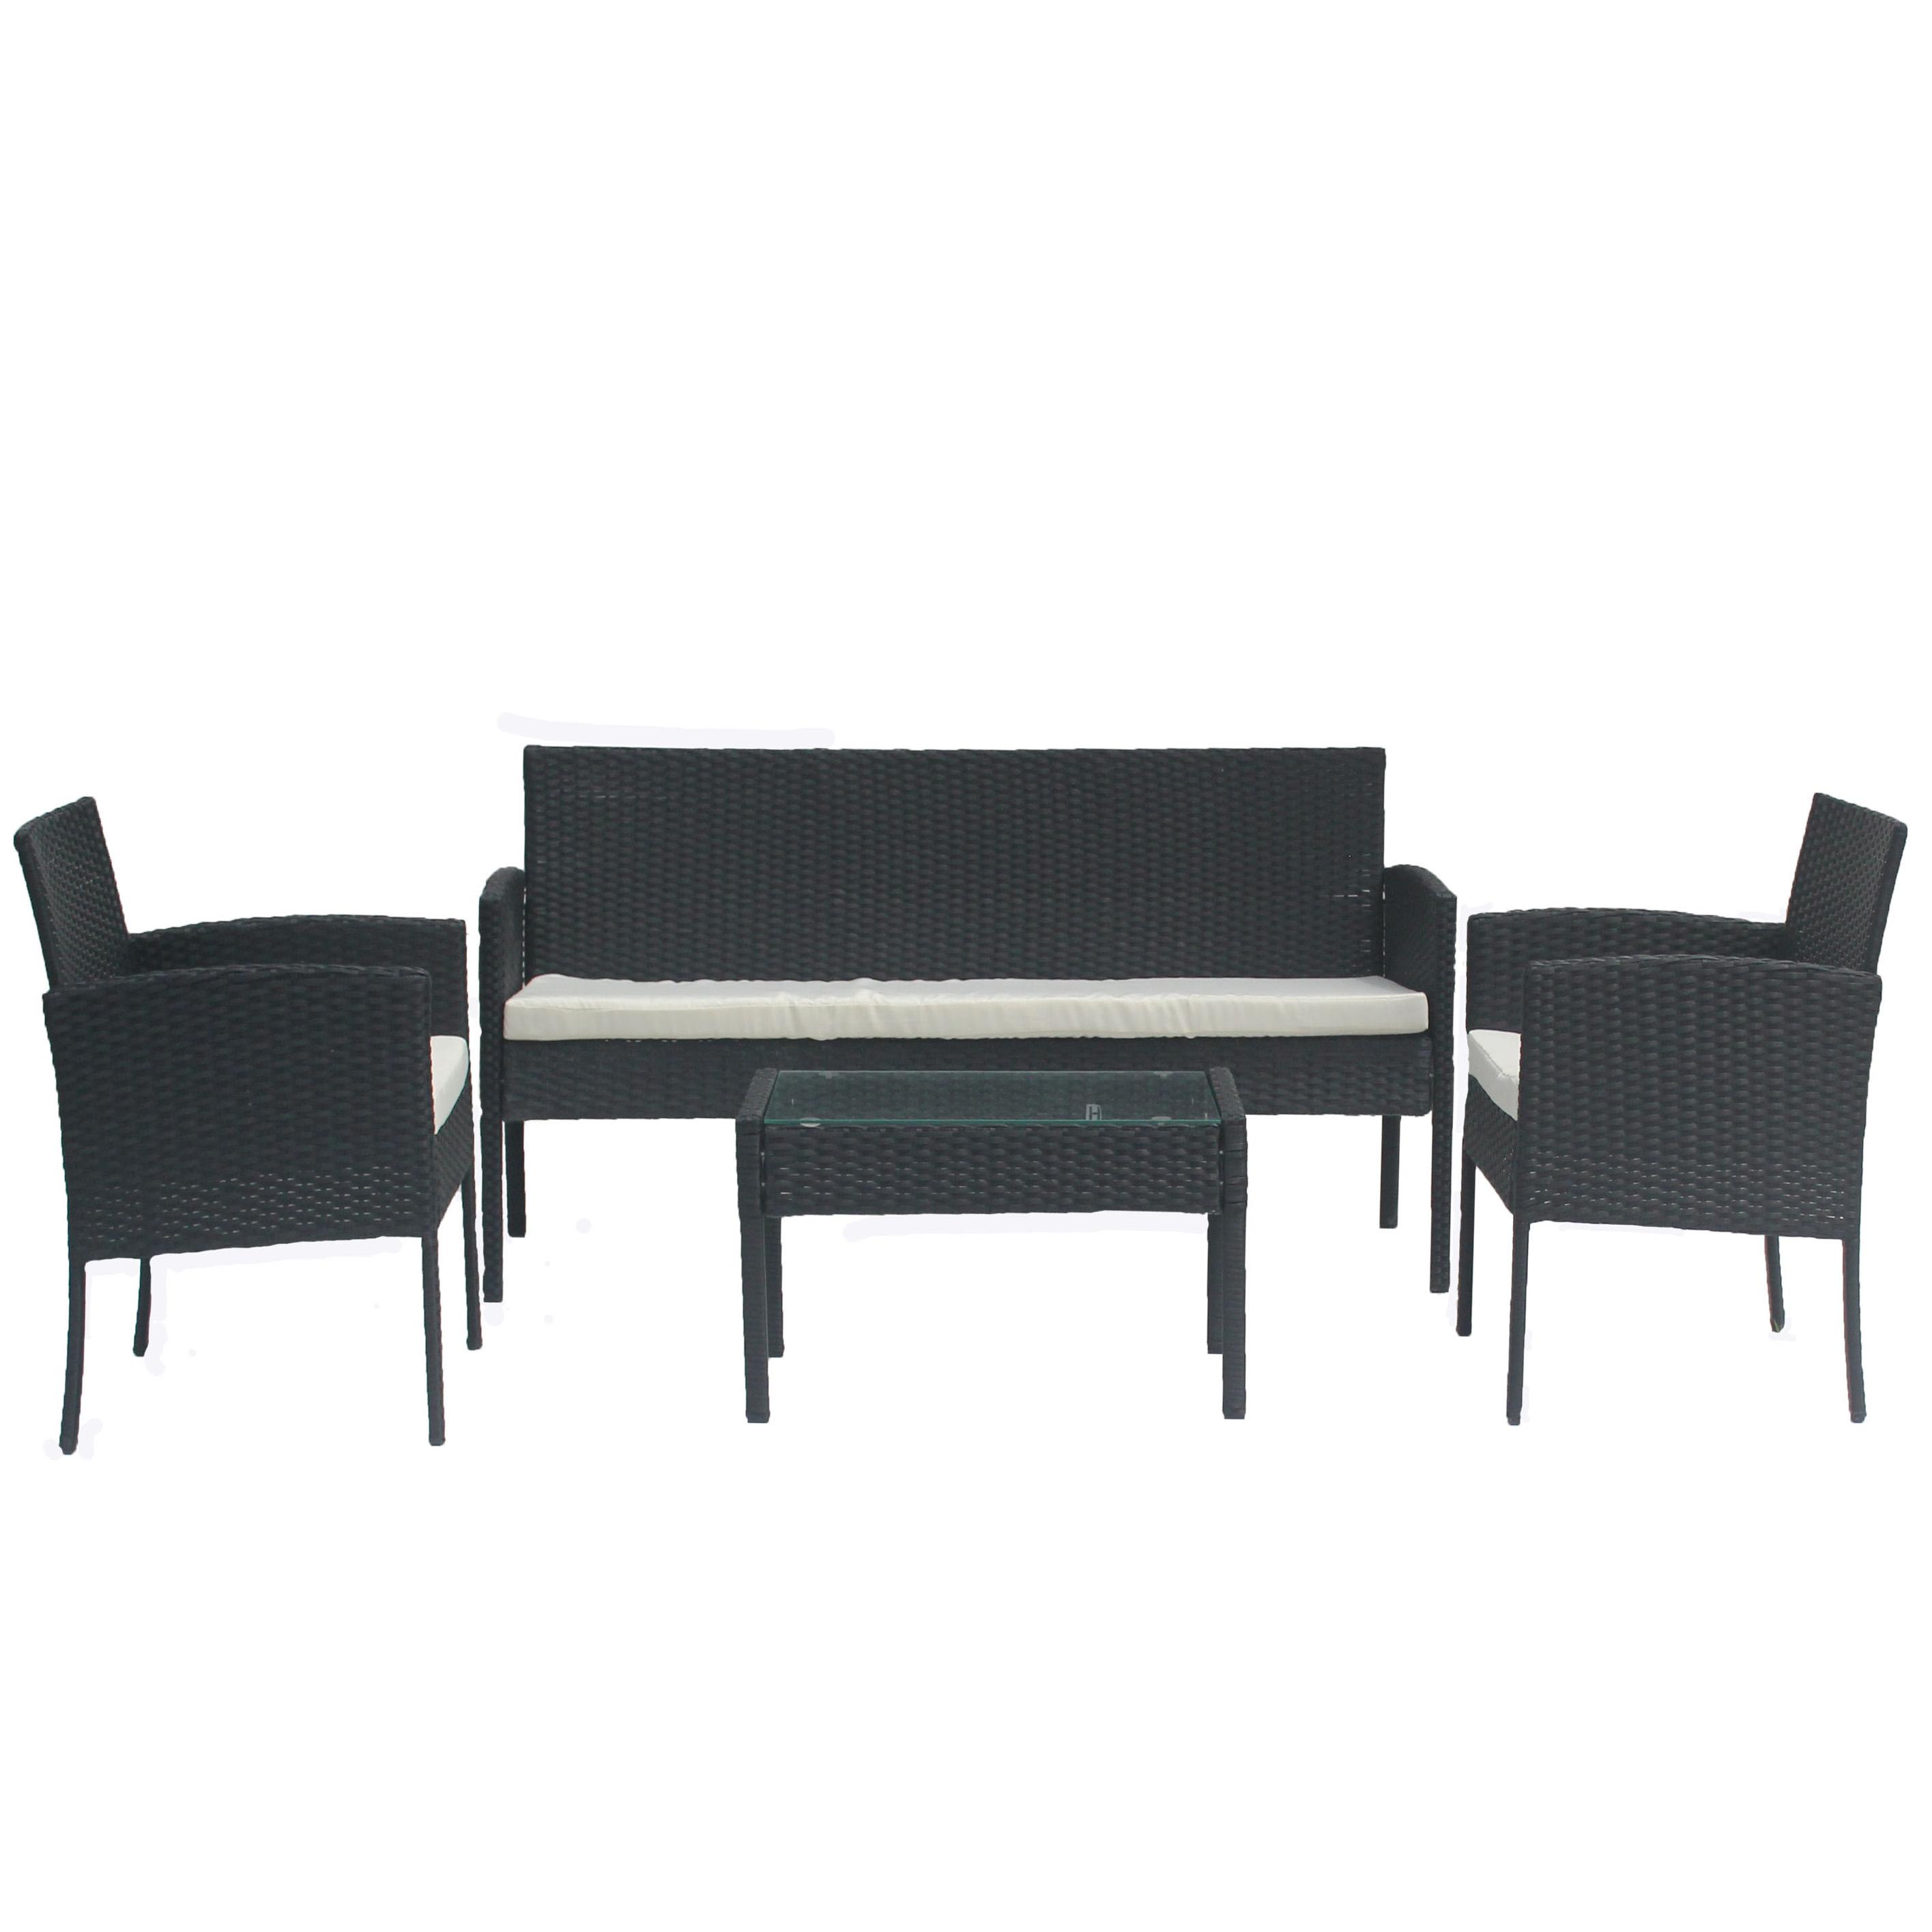 Set mobilier de gradina DeHome MG410, canapea, fotolii si masuta incluse, culoare negru